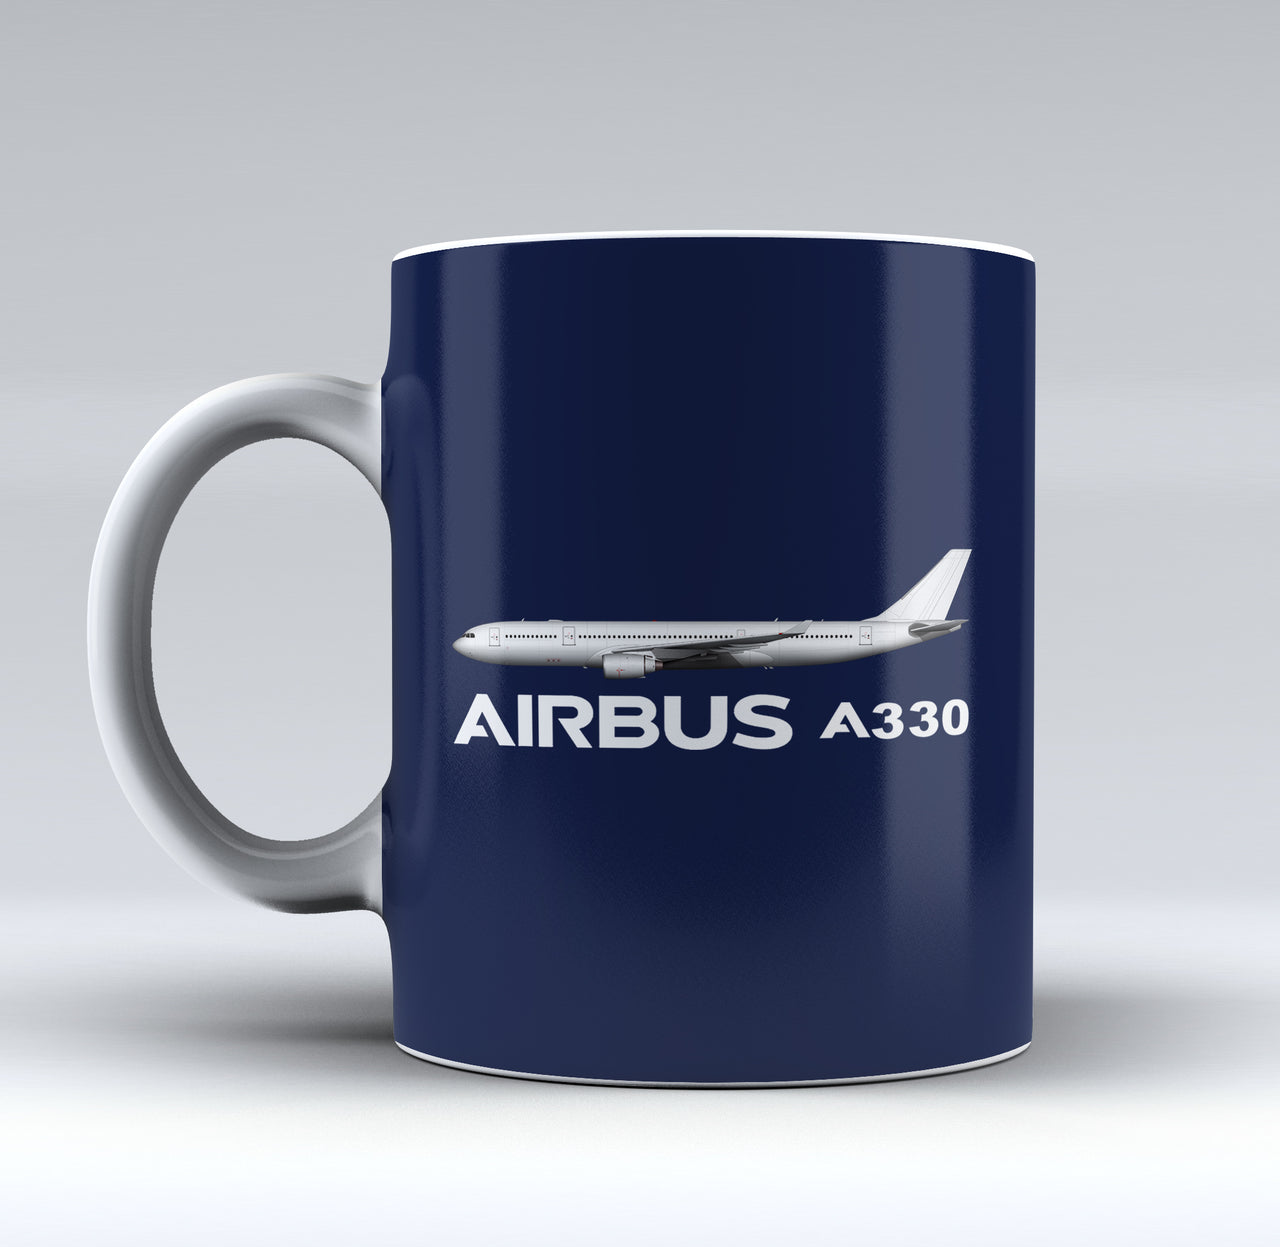 The Airbus A330 Designed Mugs